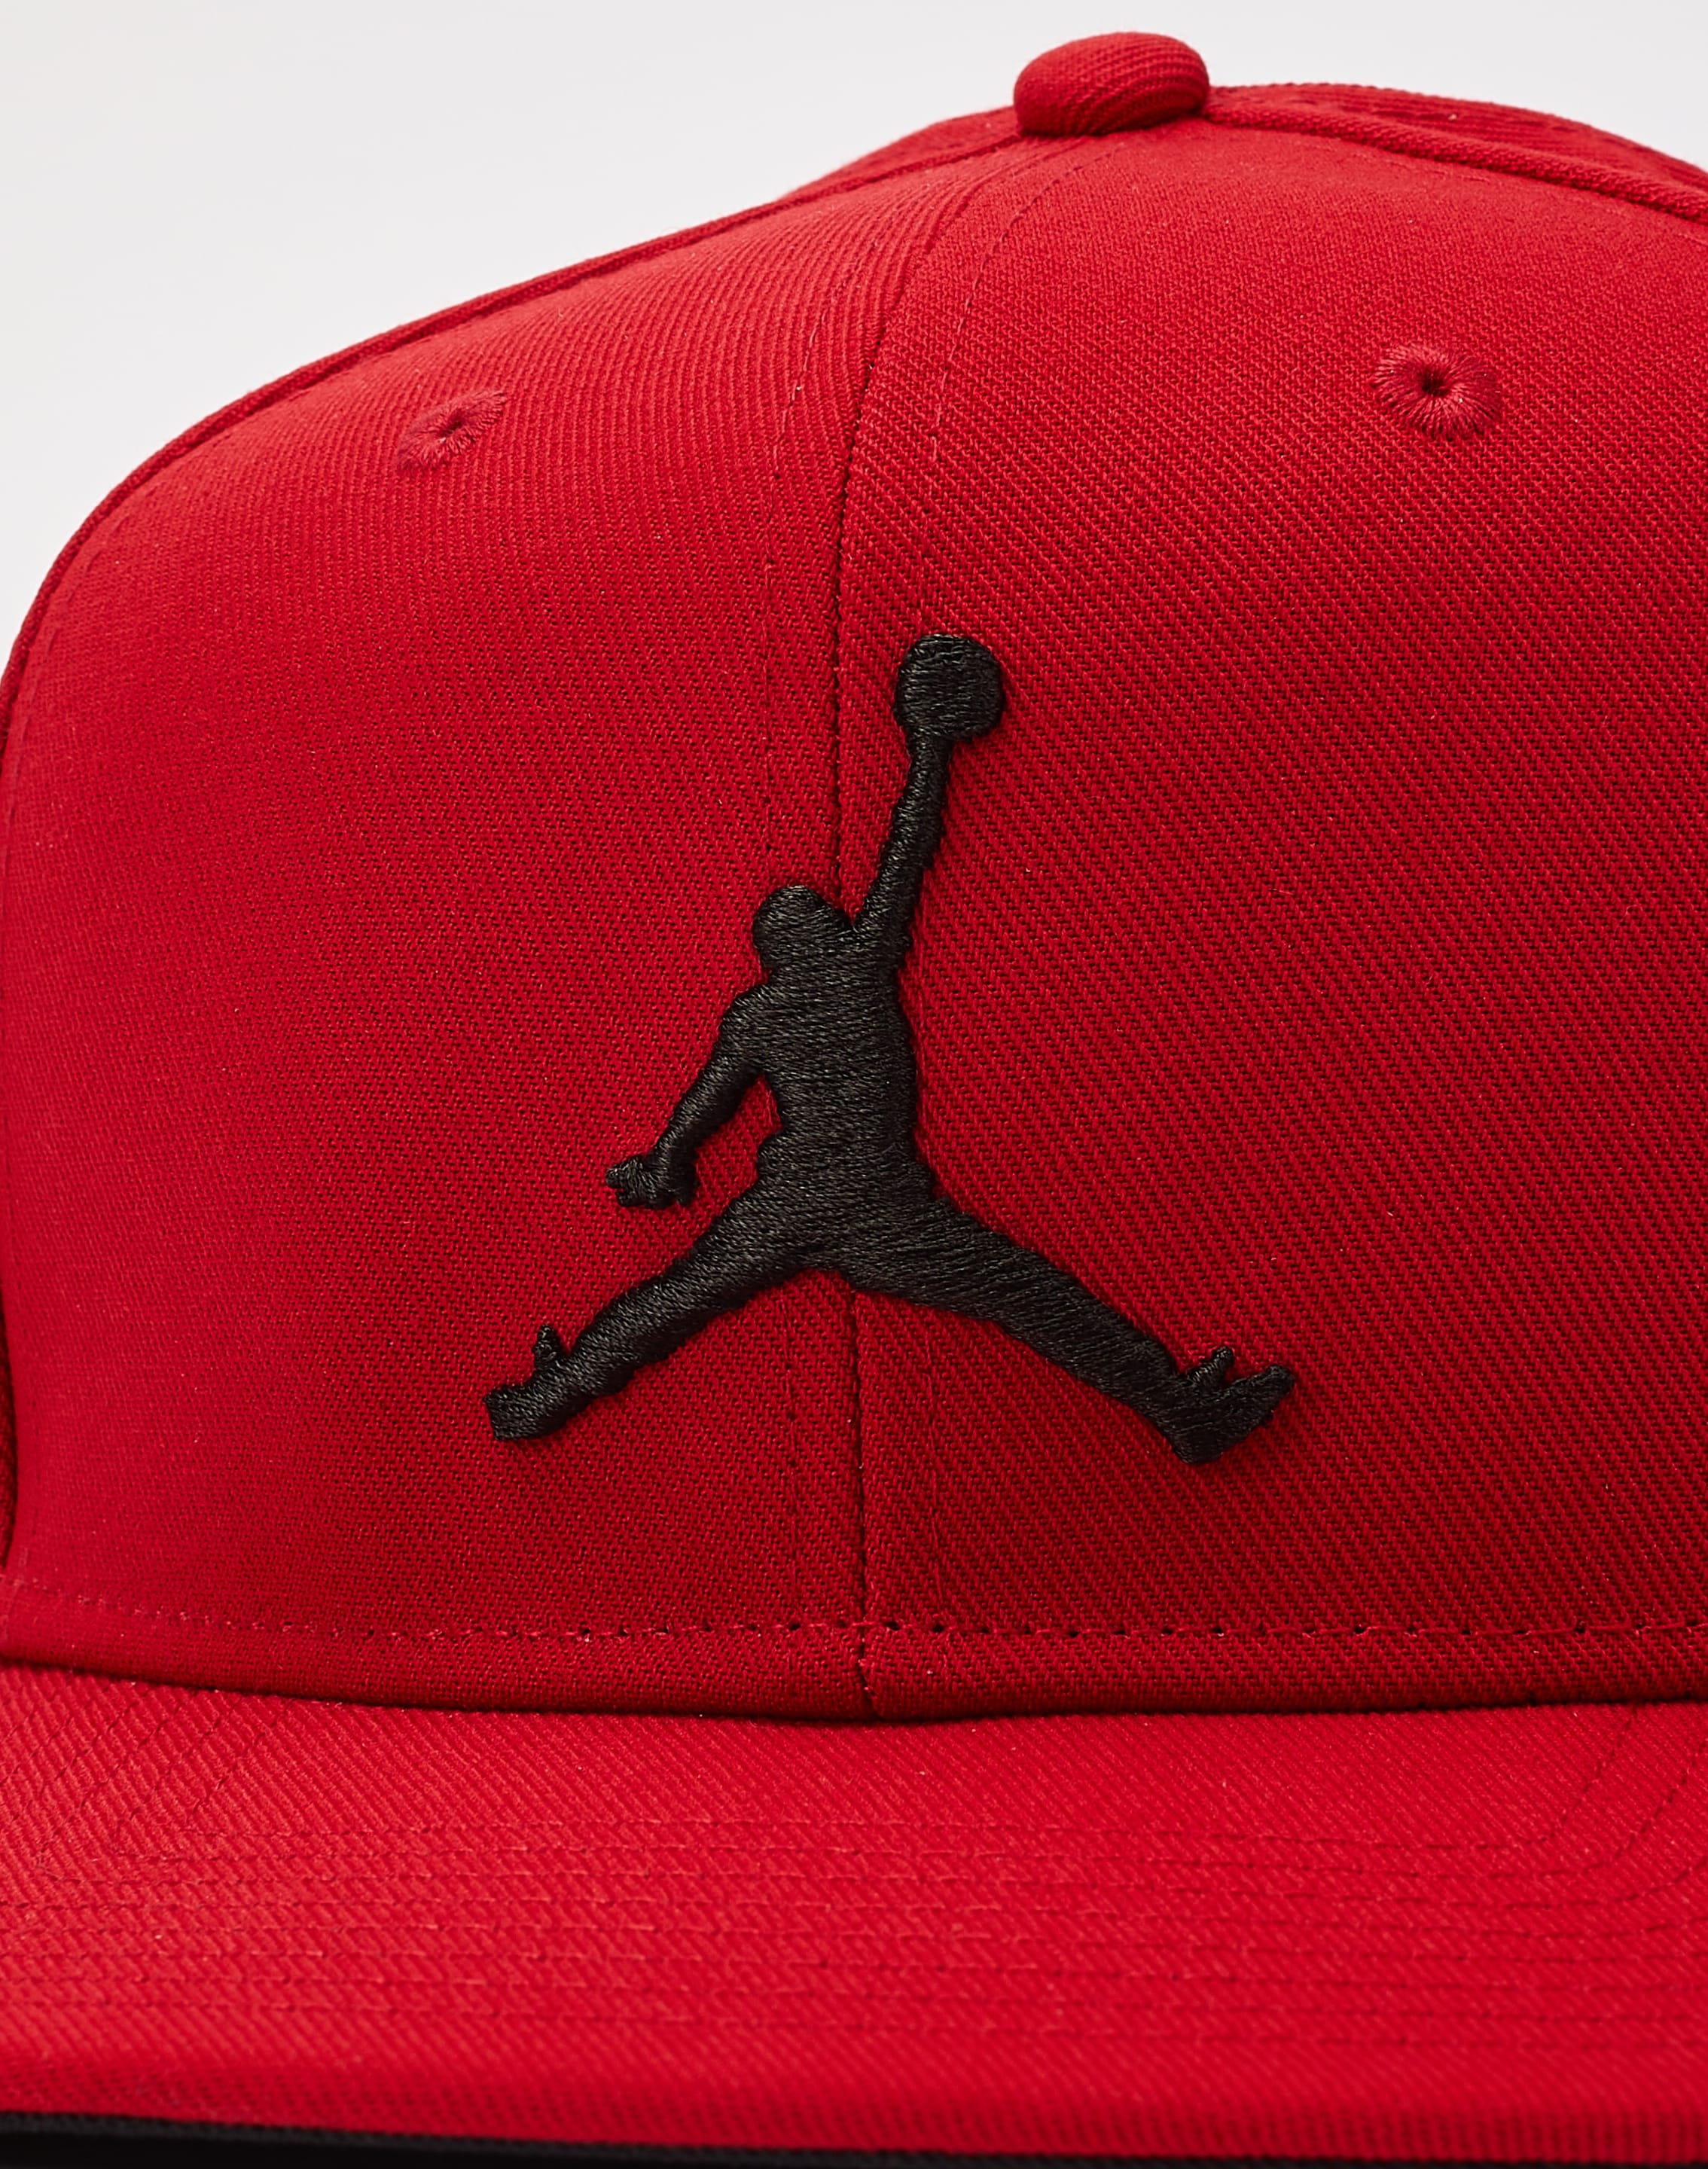 Jordan Brand Pro Jumpman Snapback Hat - Black/Red